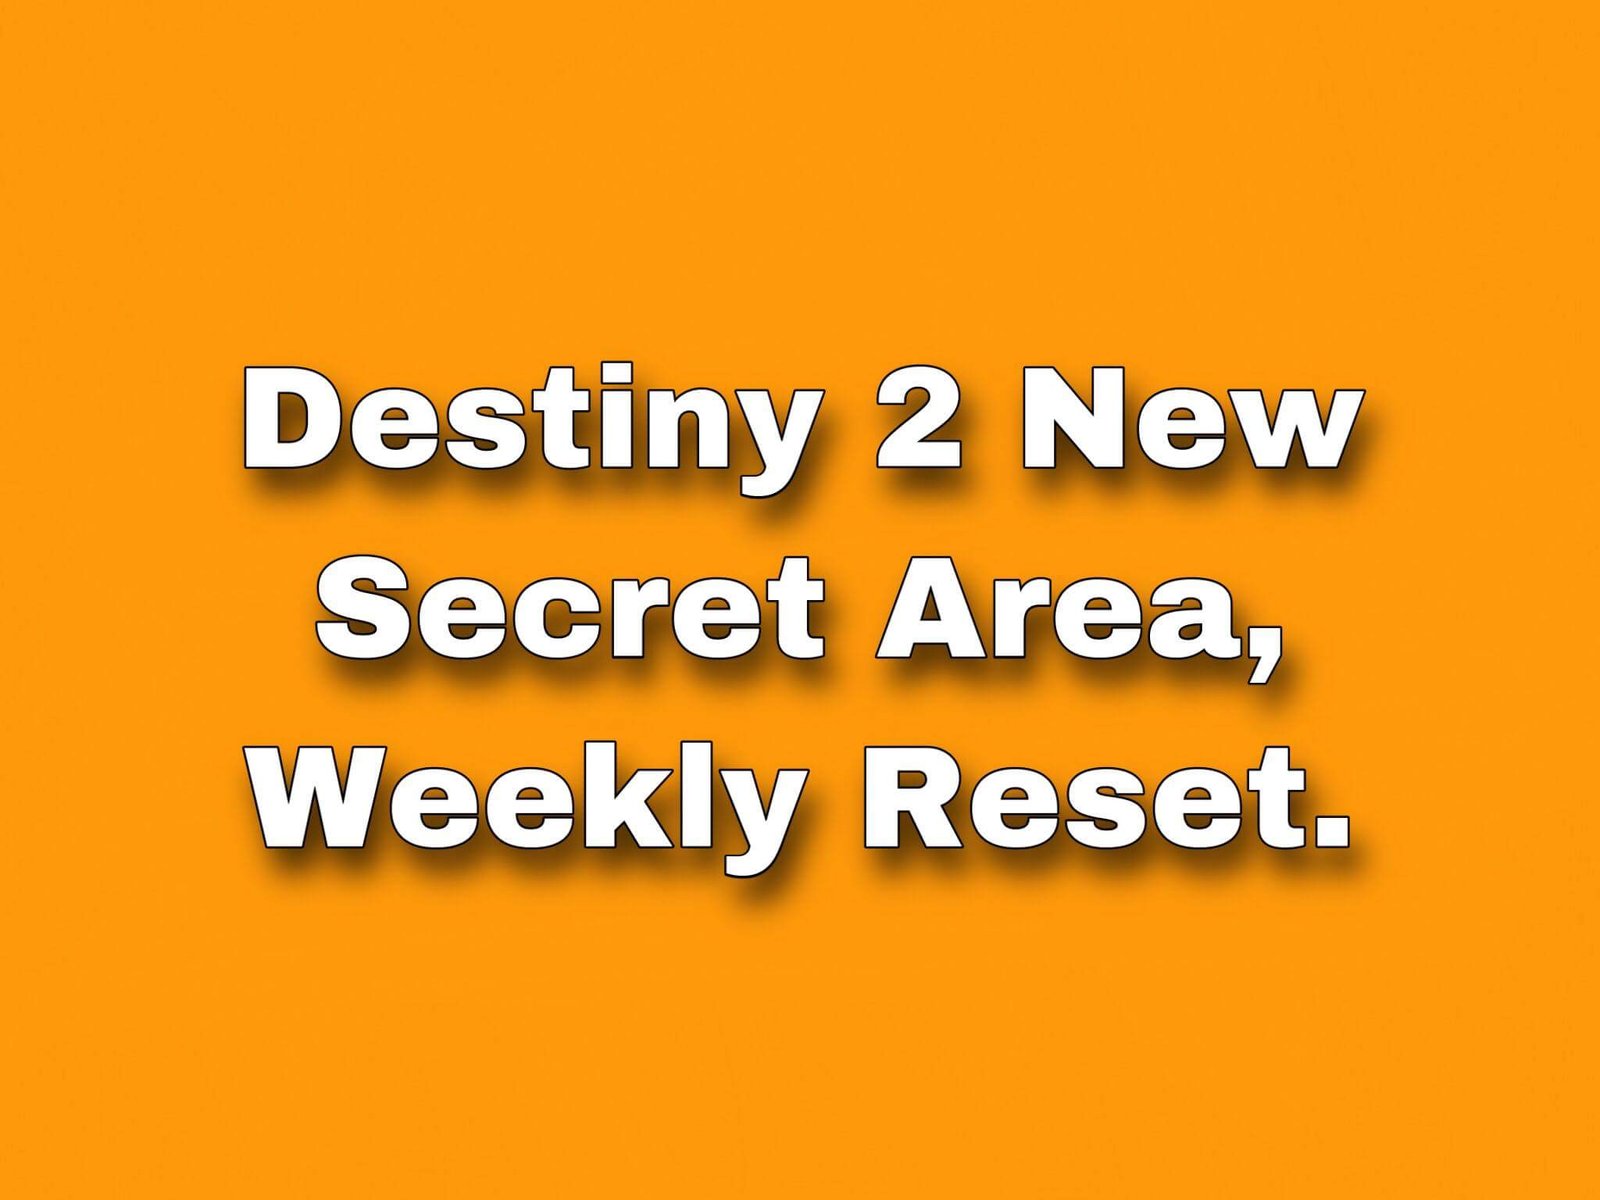 Destiny 2 New Secret Area, Weekly Reset.